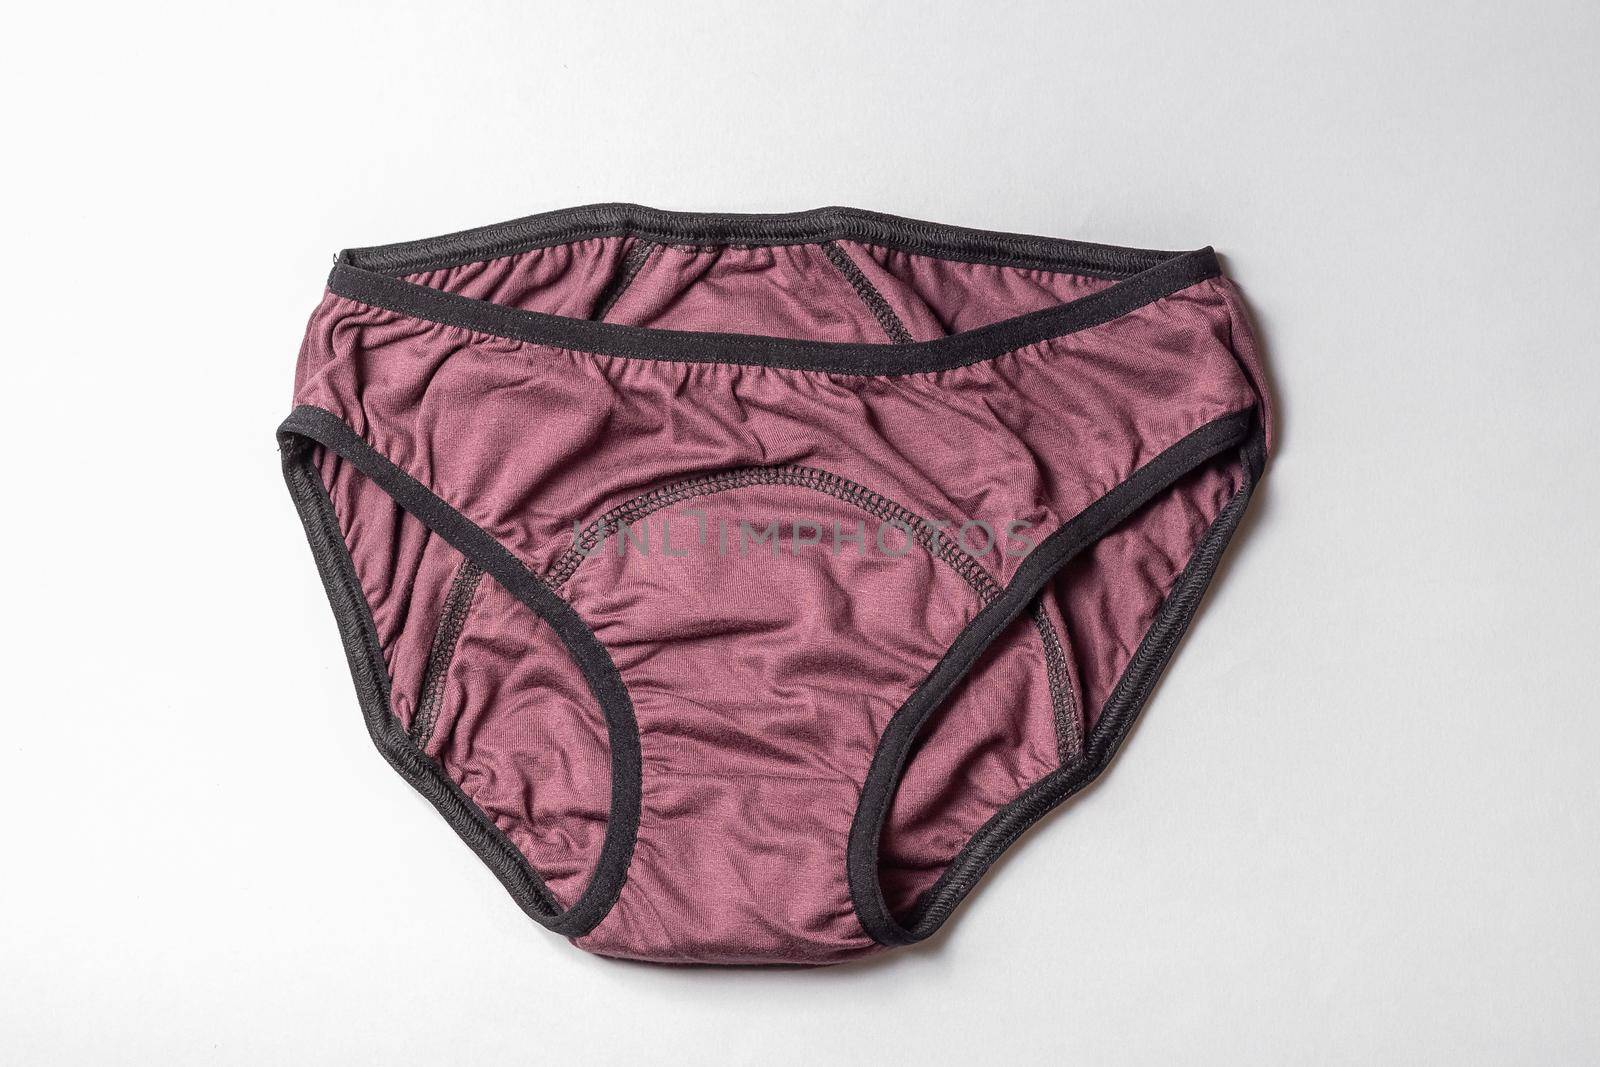 Reusable hygiene period menstruation underwear panties. Top view on gray background.